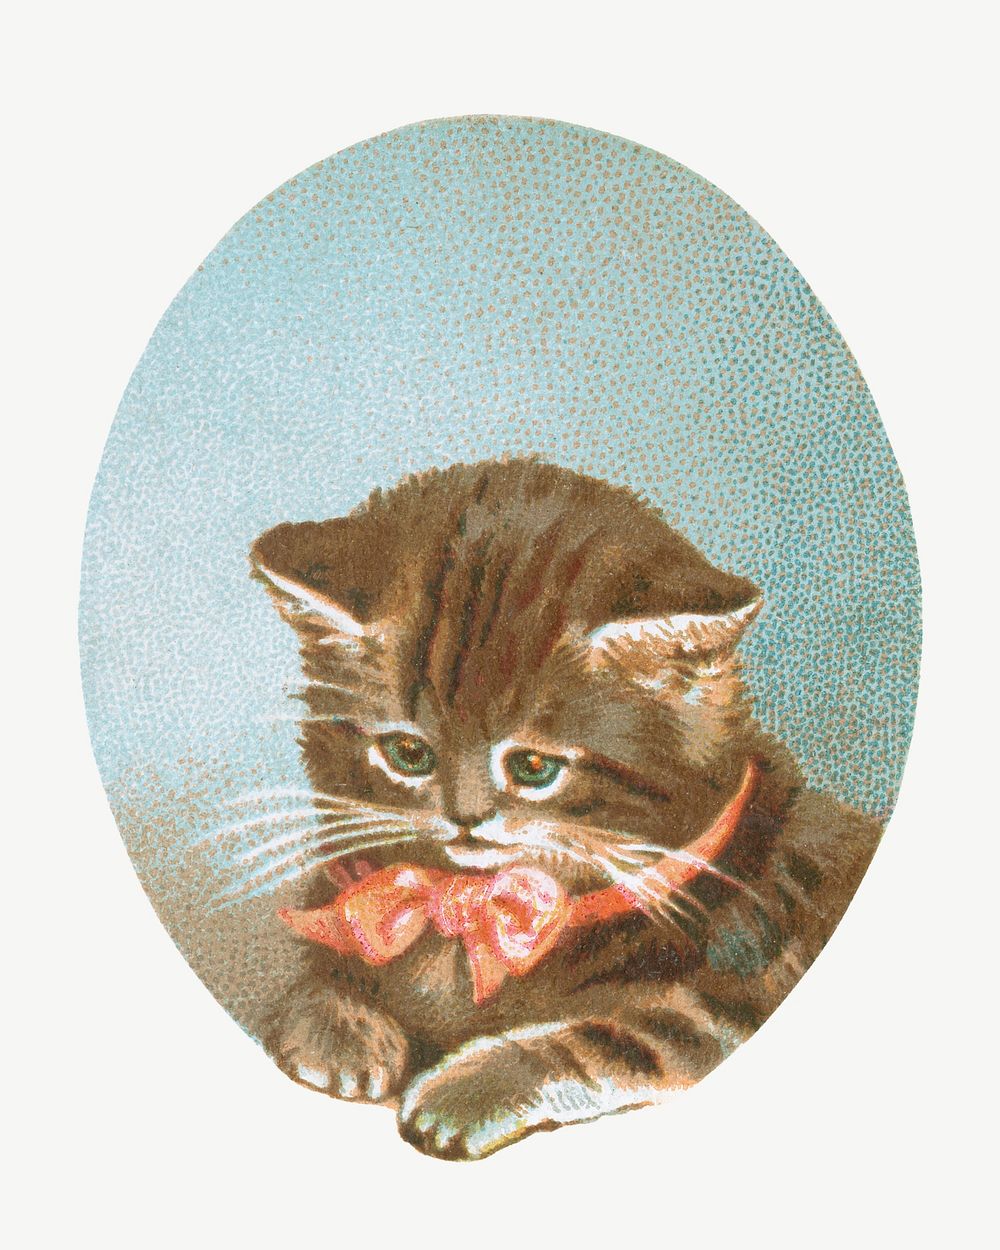 Cute little kitten, vintage cat illustration psd. Remixed by rawpixel.